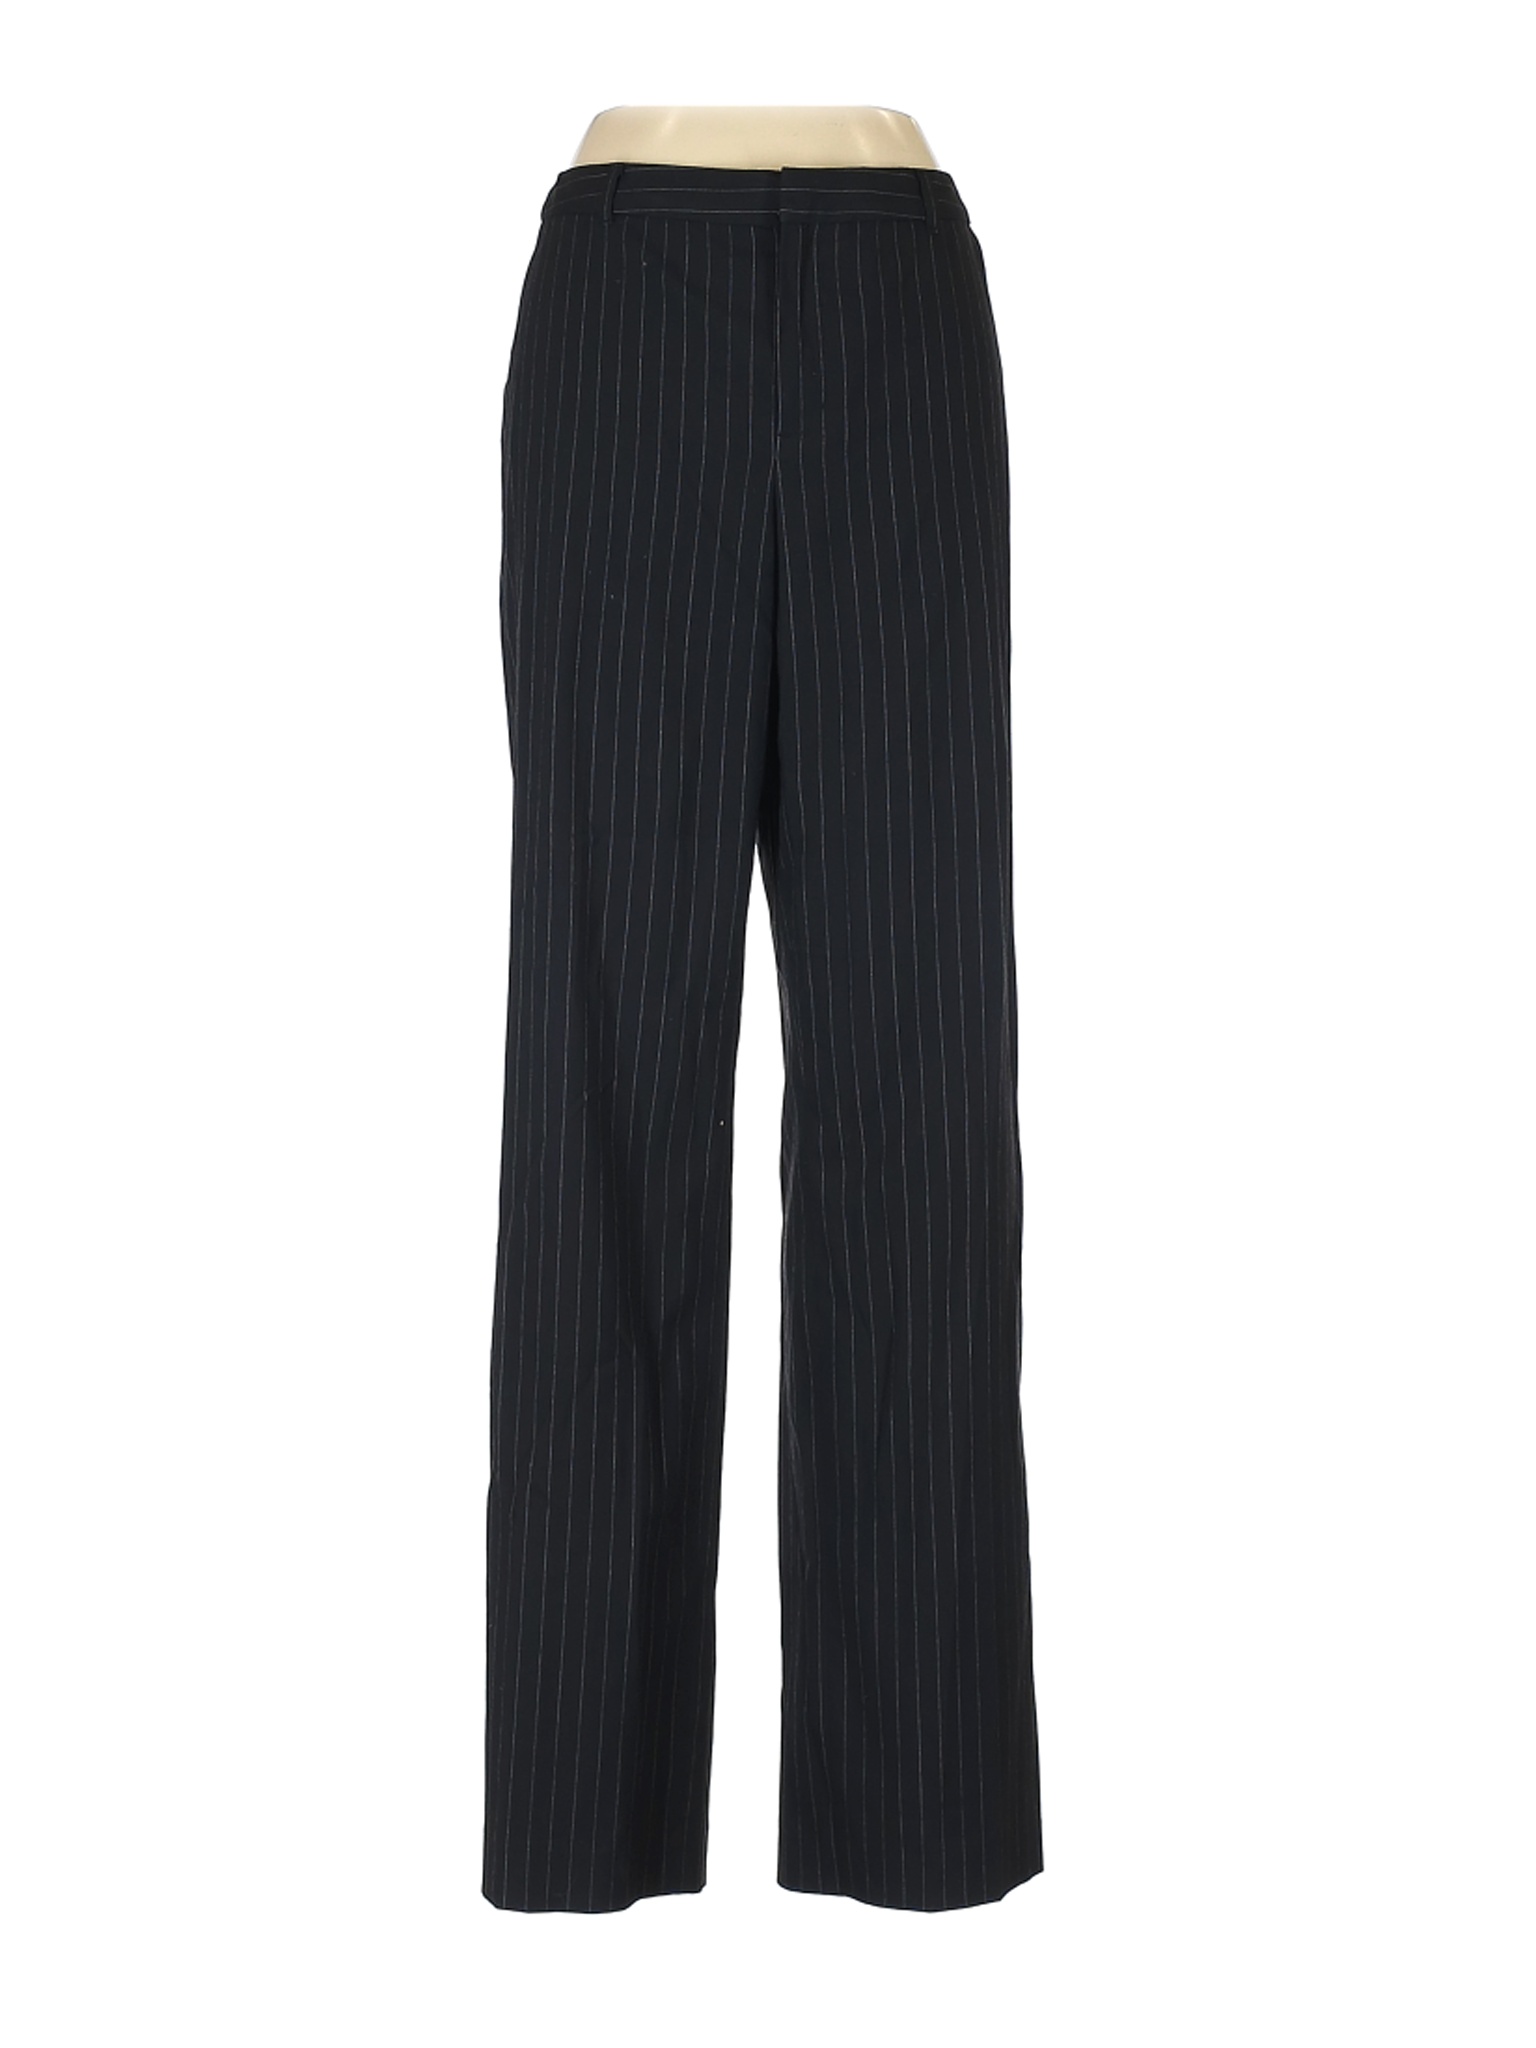 Liz Claiborne Women Black Dress Pants 8 Ebay 